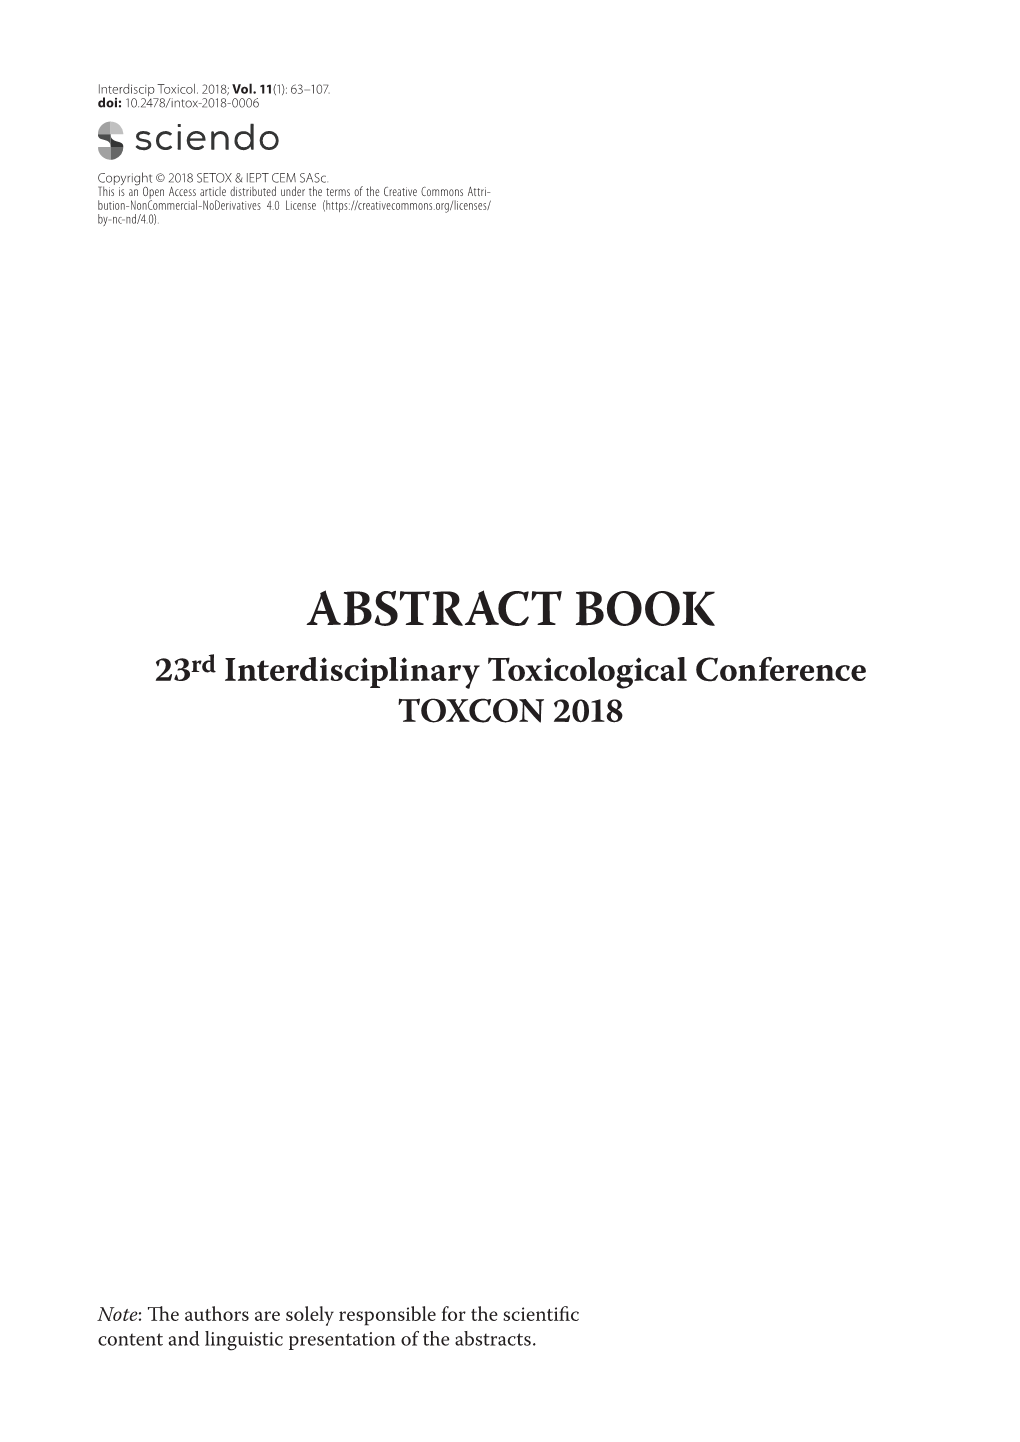 ABSTRACT BOOK 23Rd Interdisciplinary Toxicological Conference TOXCON 2018